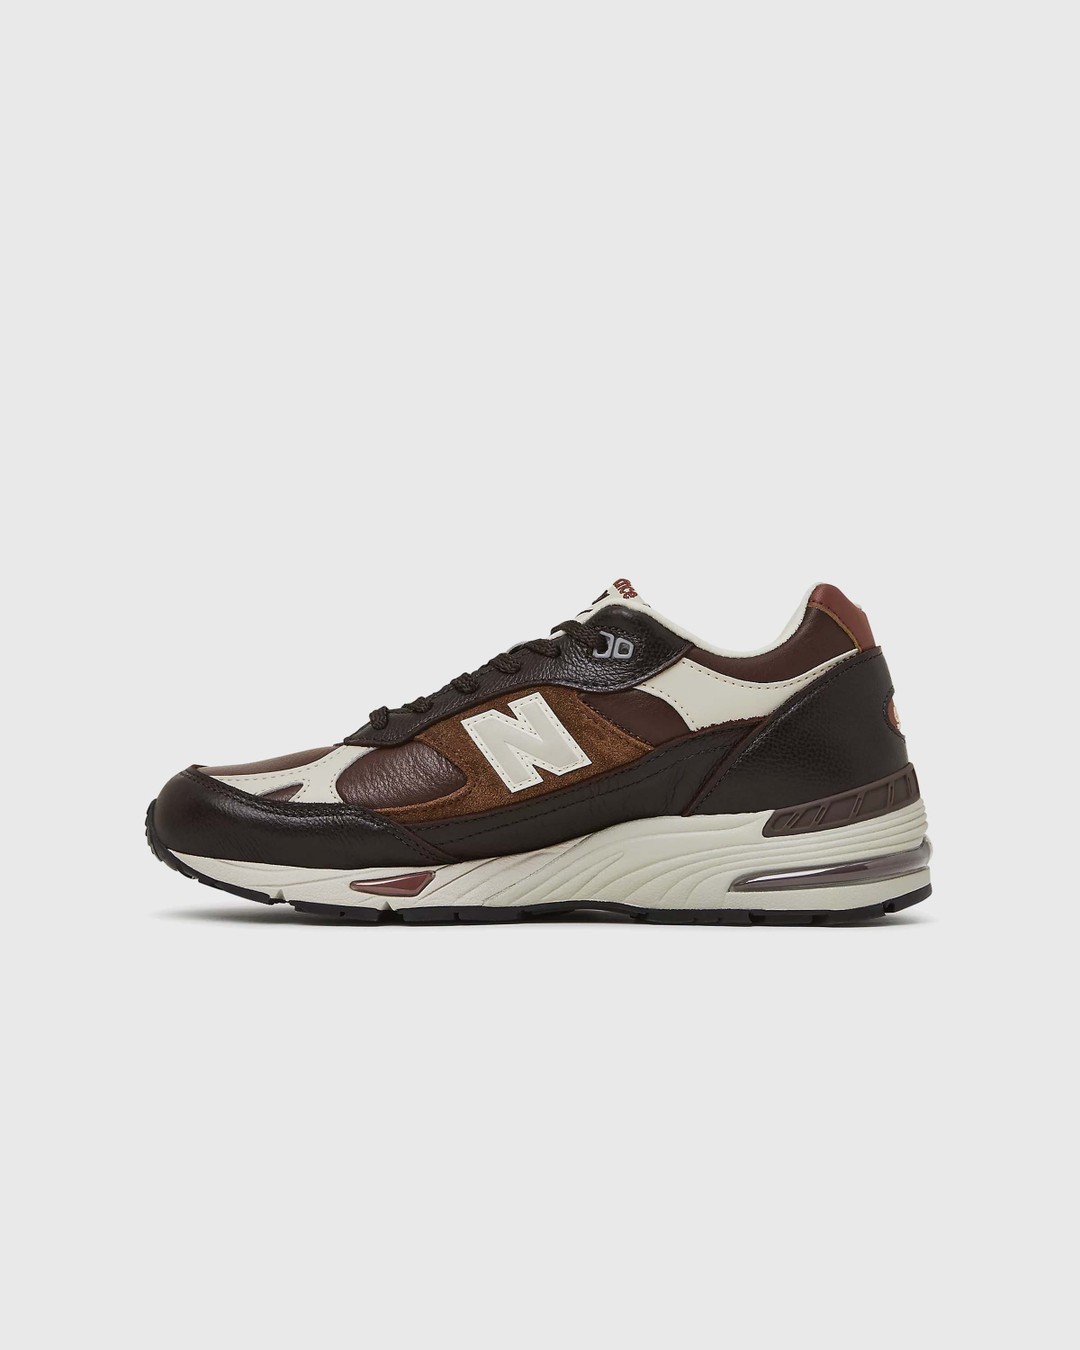 New Balance – M991GBI Brown - Low Top Sneakers - Brown - Image 2